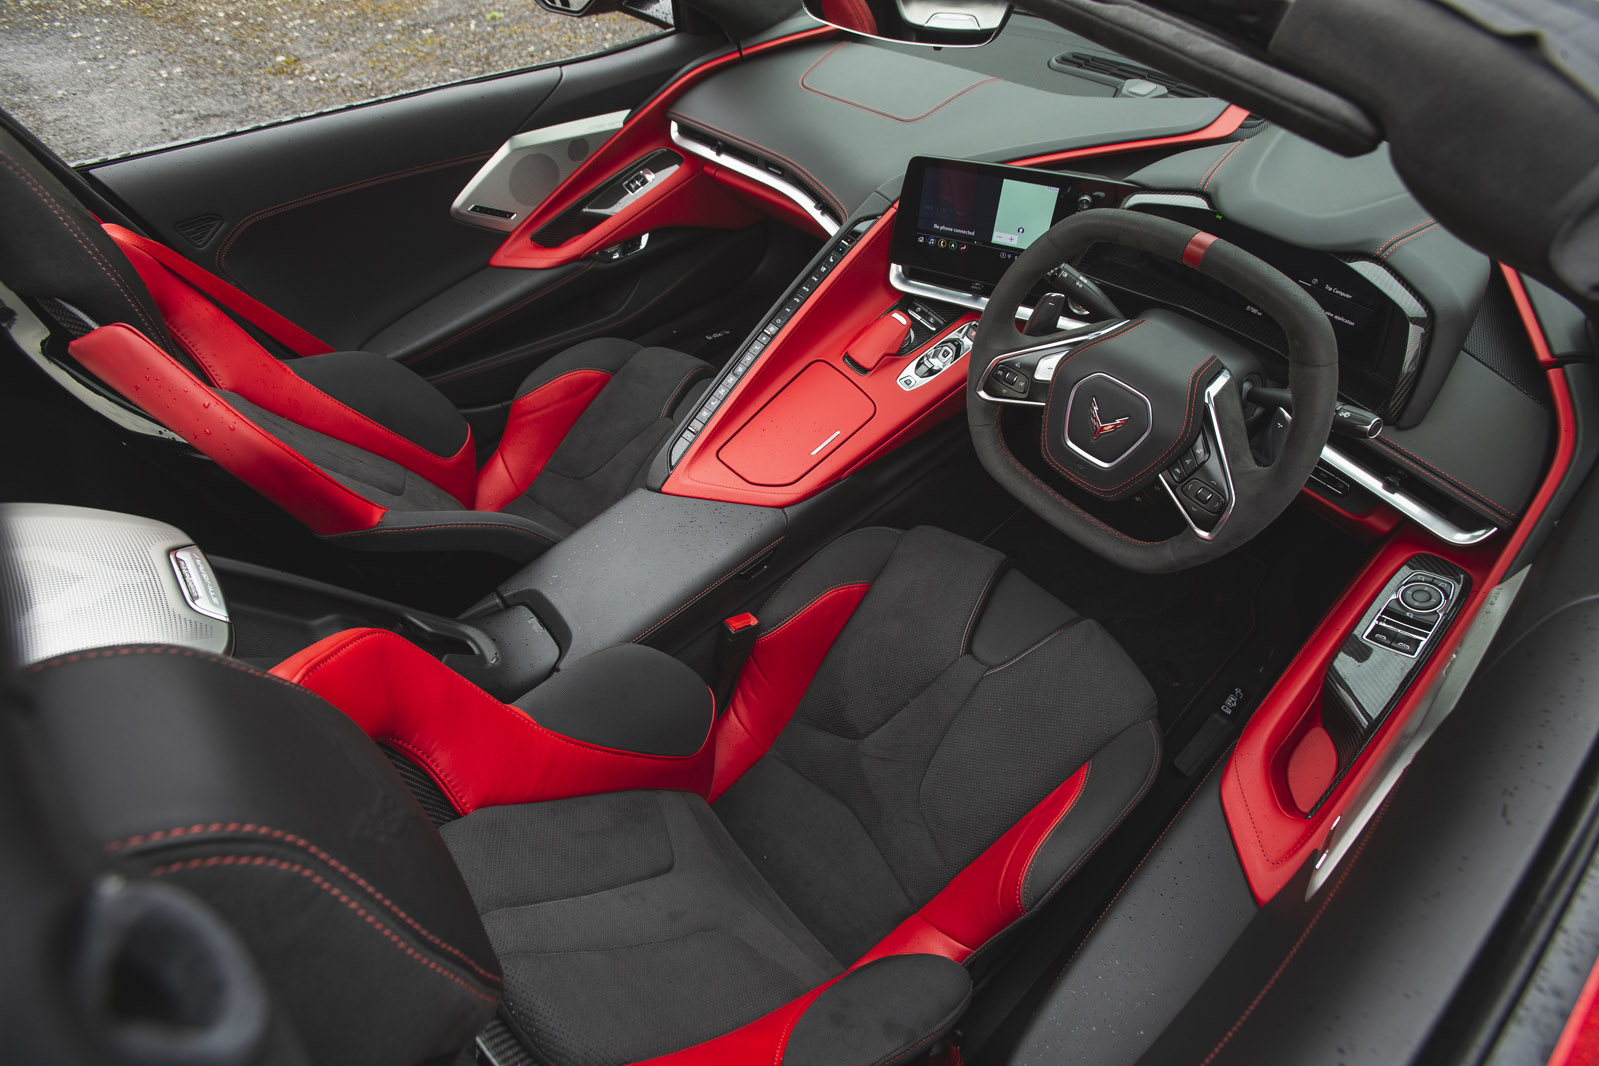 Interior view of the EU version of the C8 Corvette black and red interior.